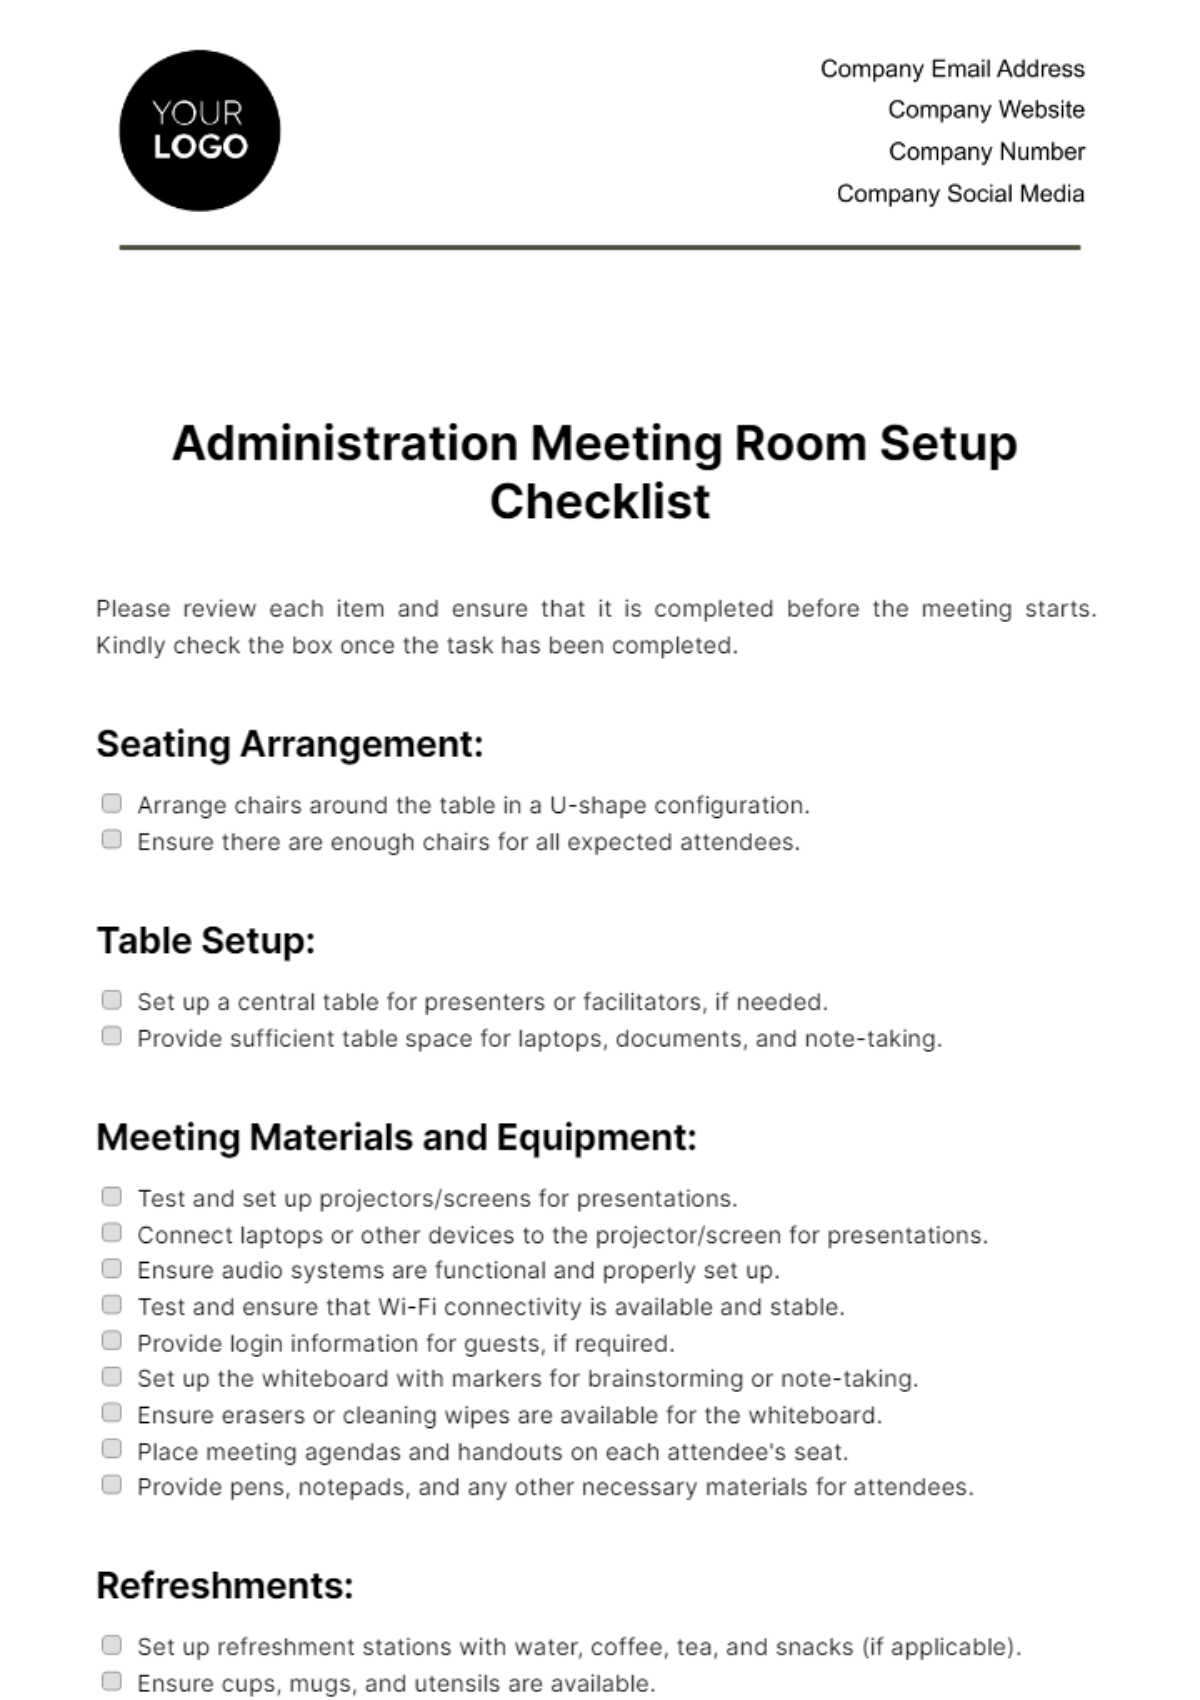 Free Administration Meeting Room Setup Checklist Template